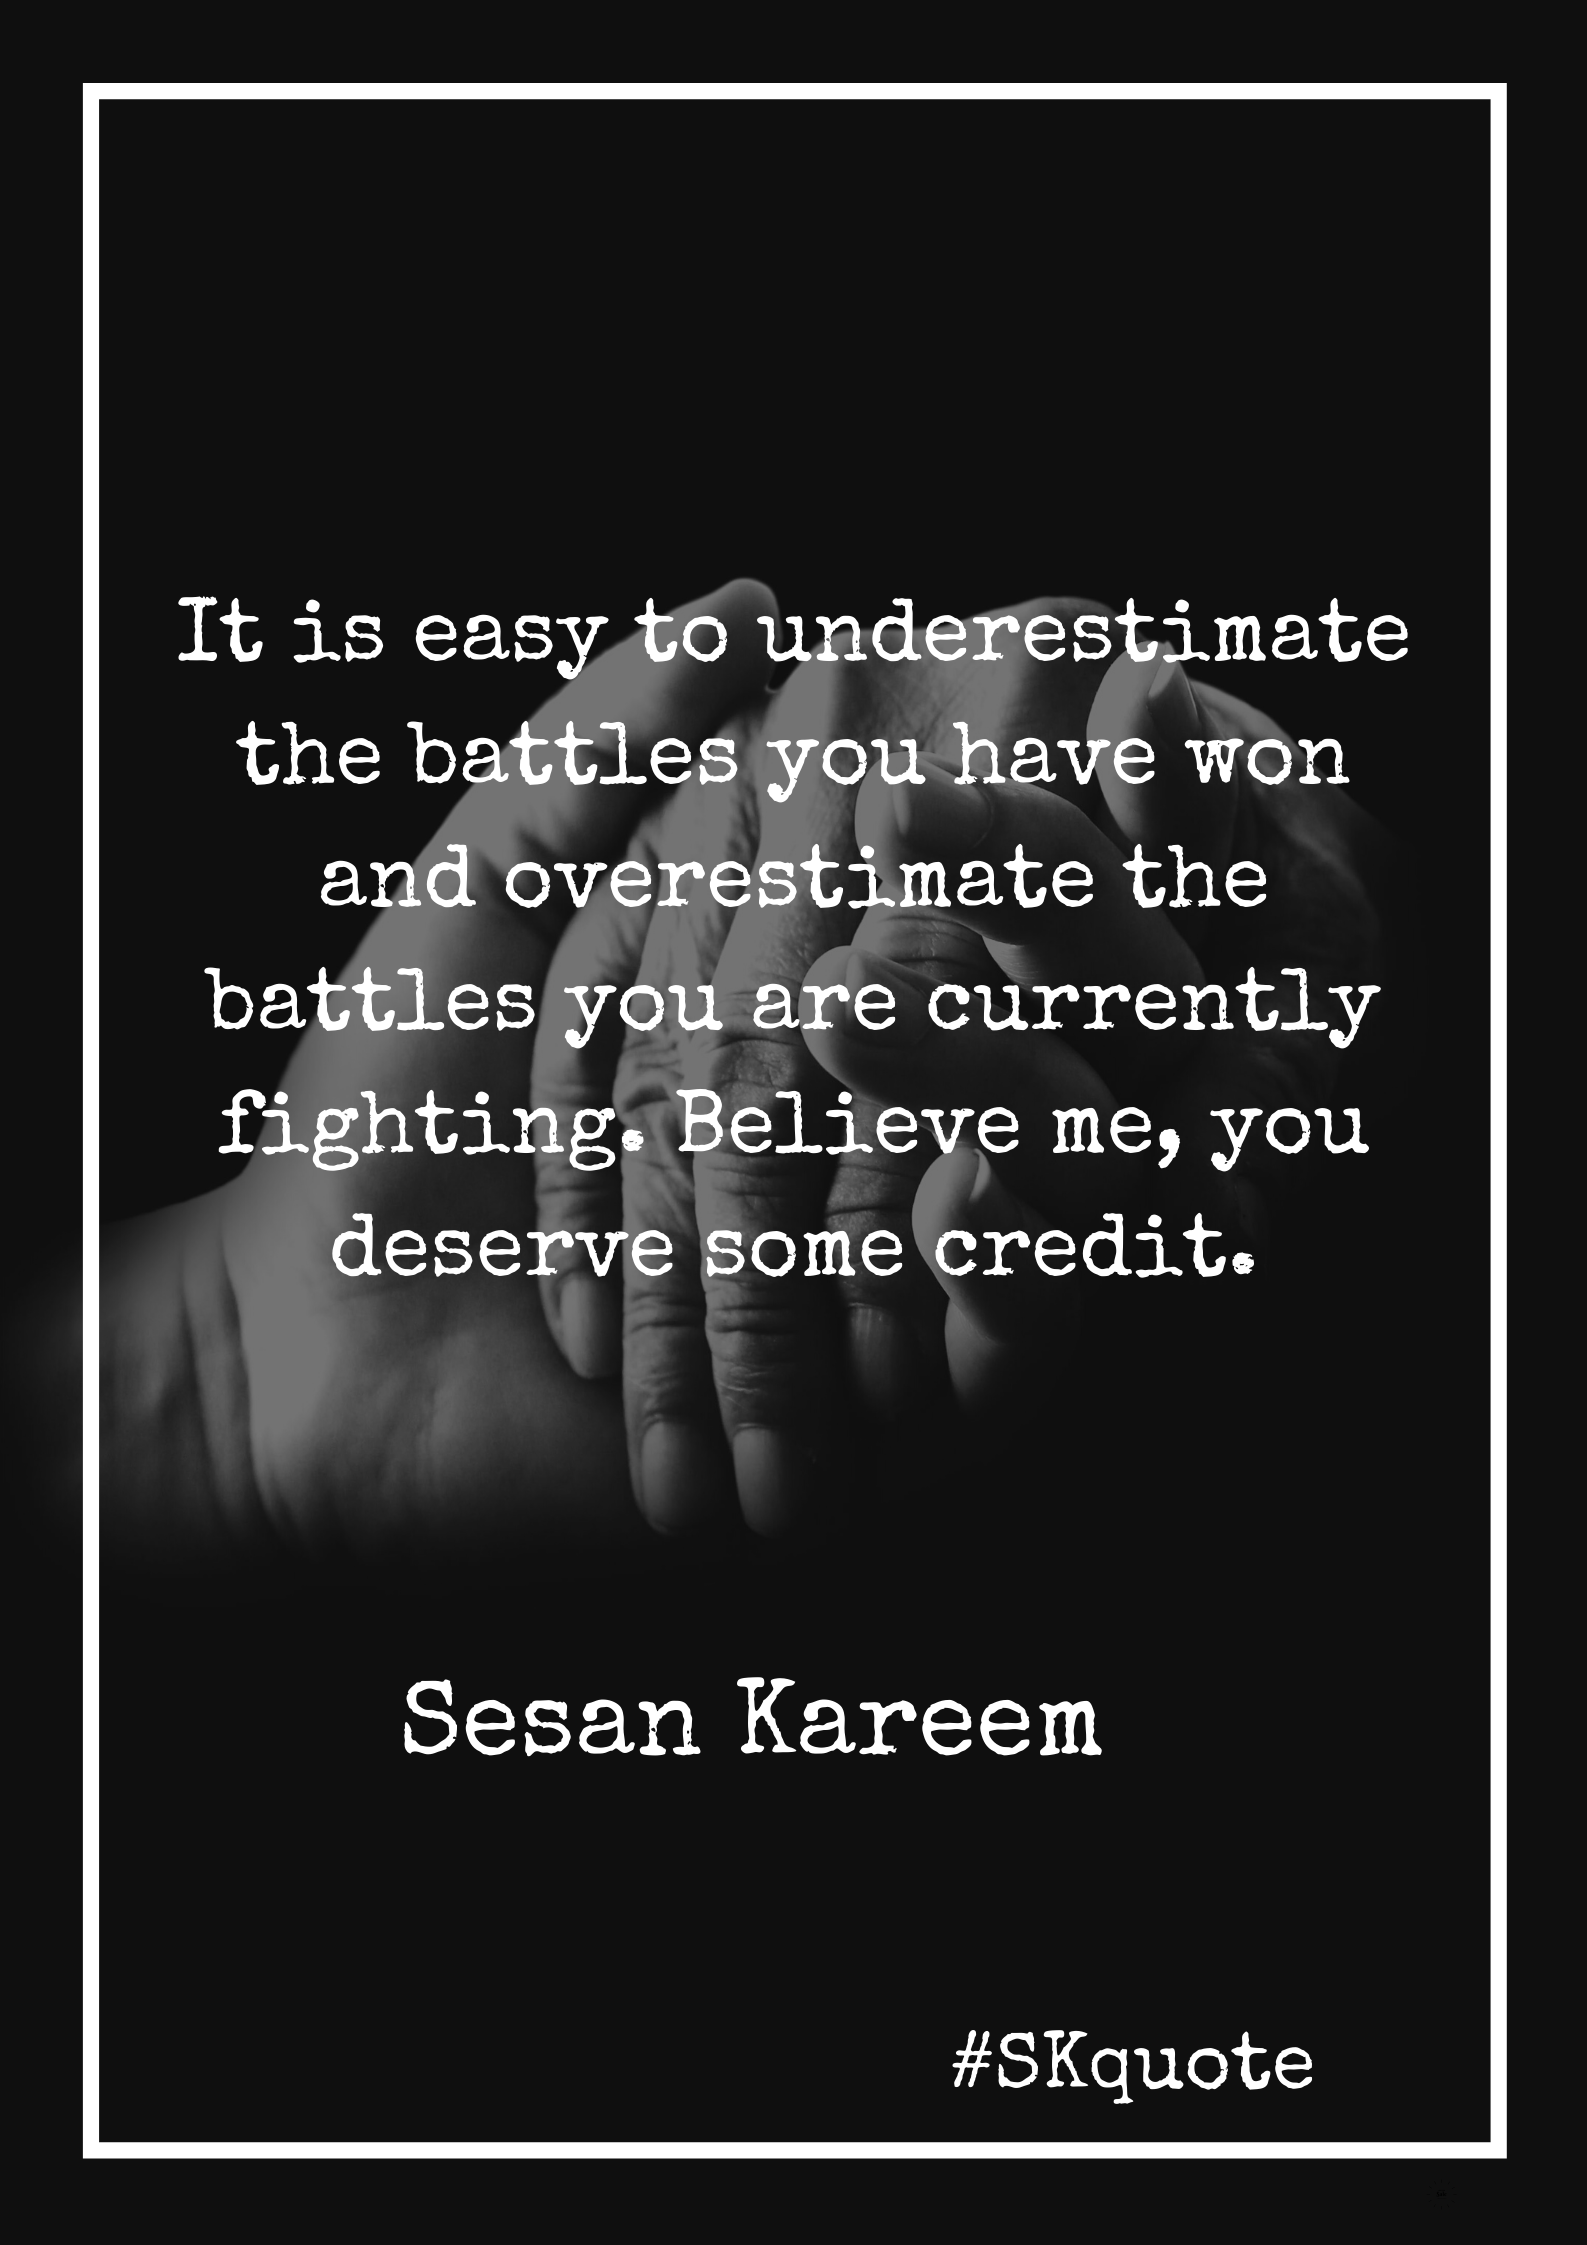 Sesan Kareem quote on belief